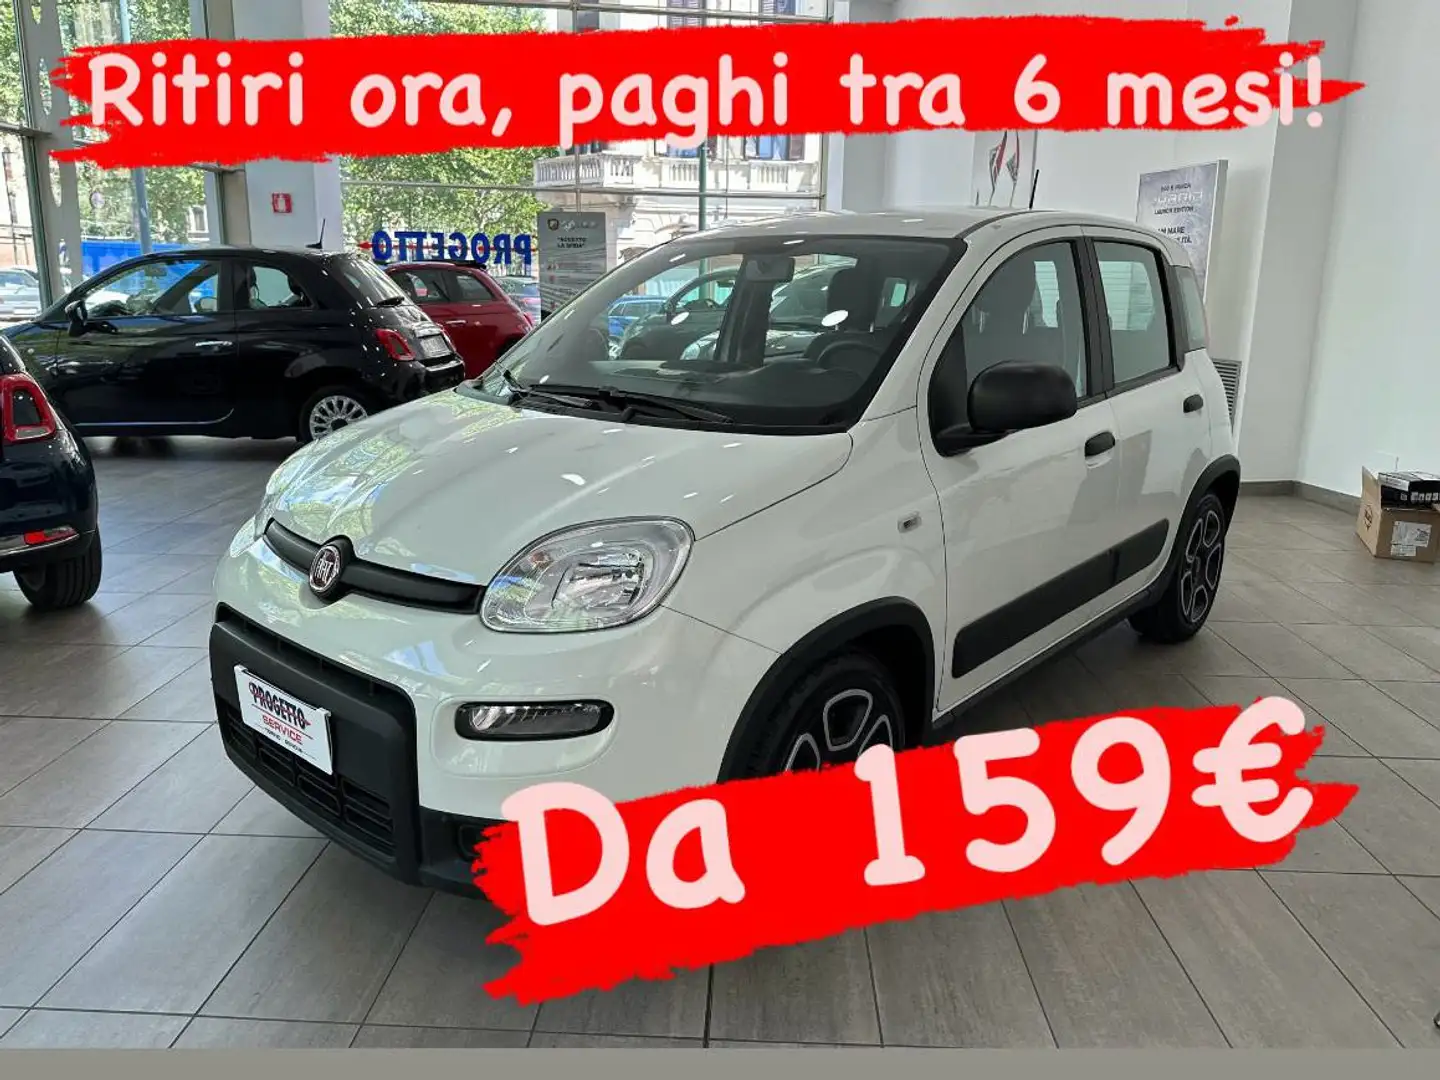 Fiat Panda DA 159€ TRA 6 MESI! White - 1